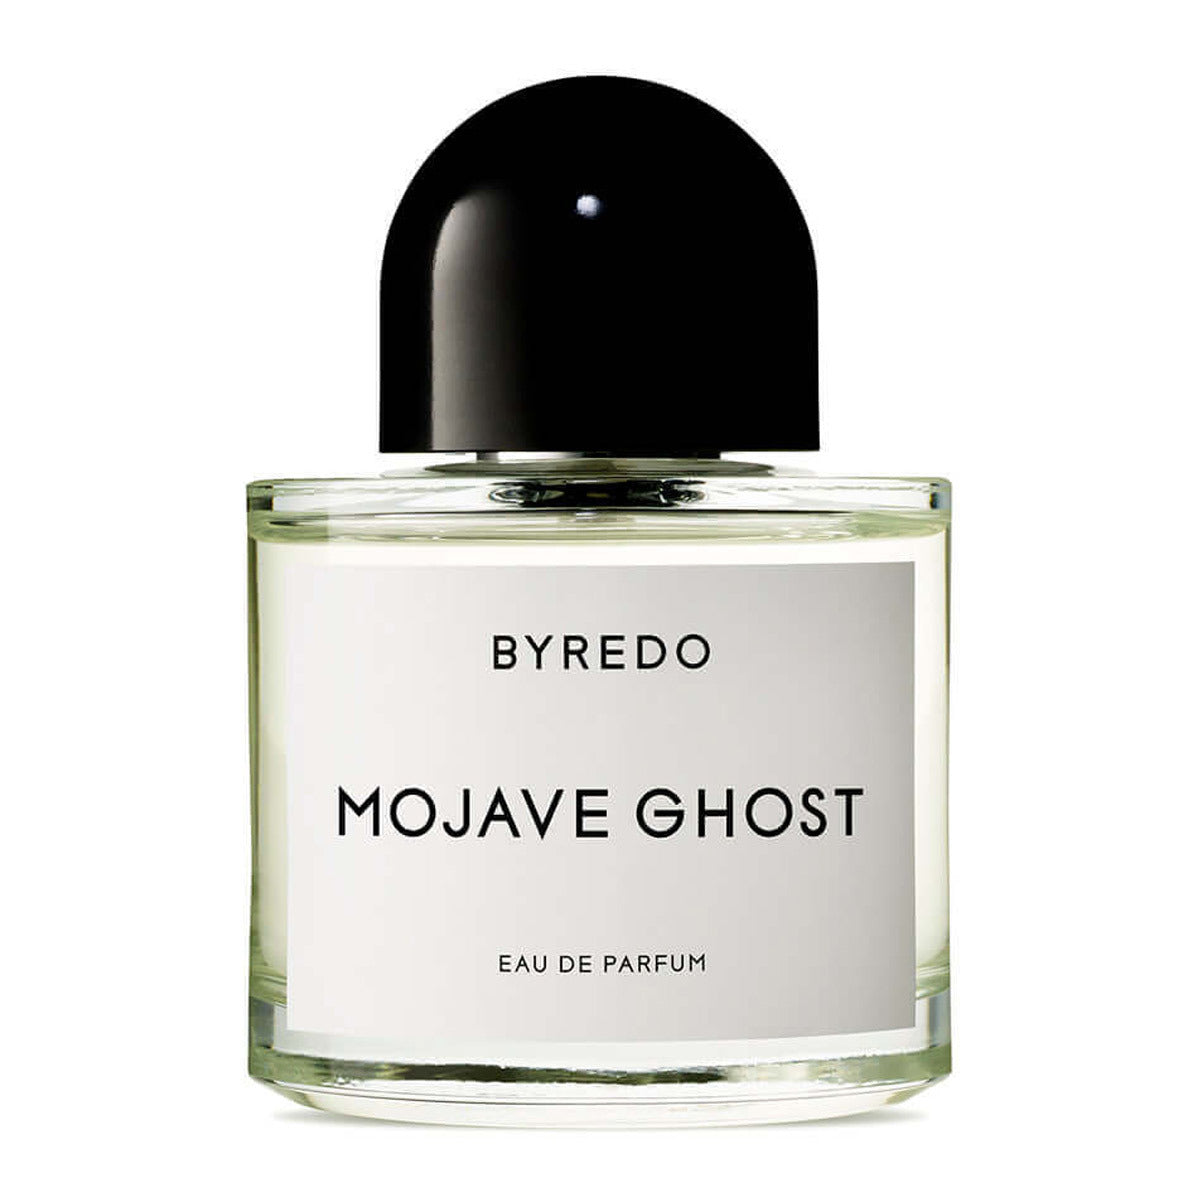 Primary image of Mojave Ghost Eau de Parfum